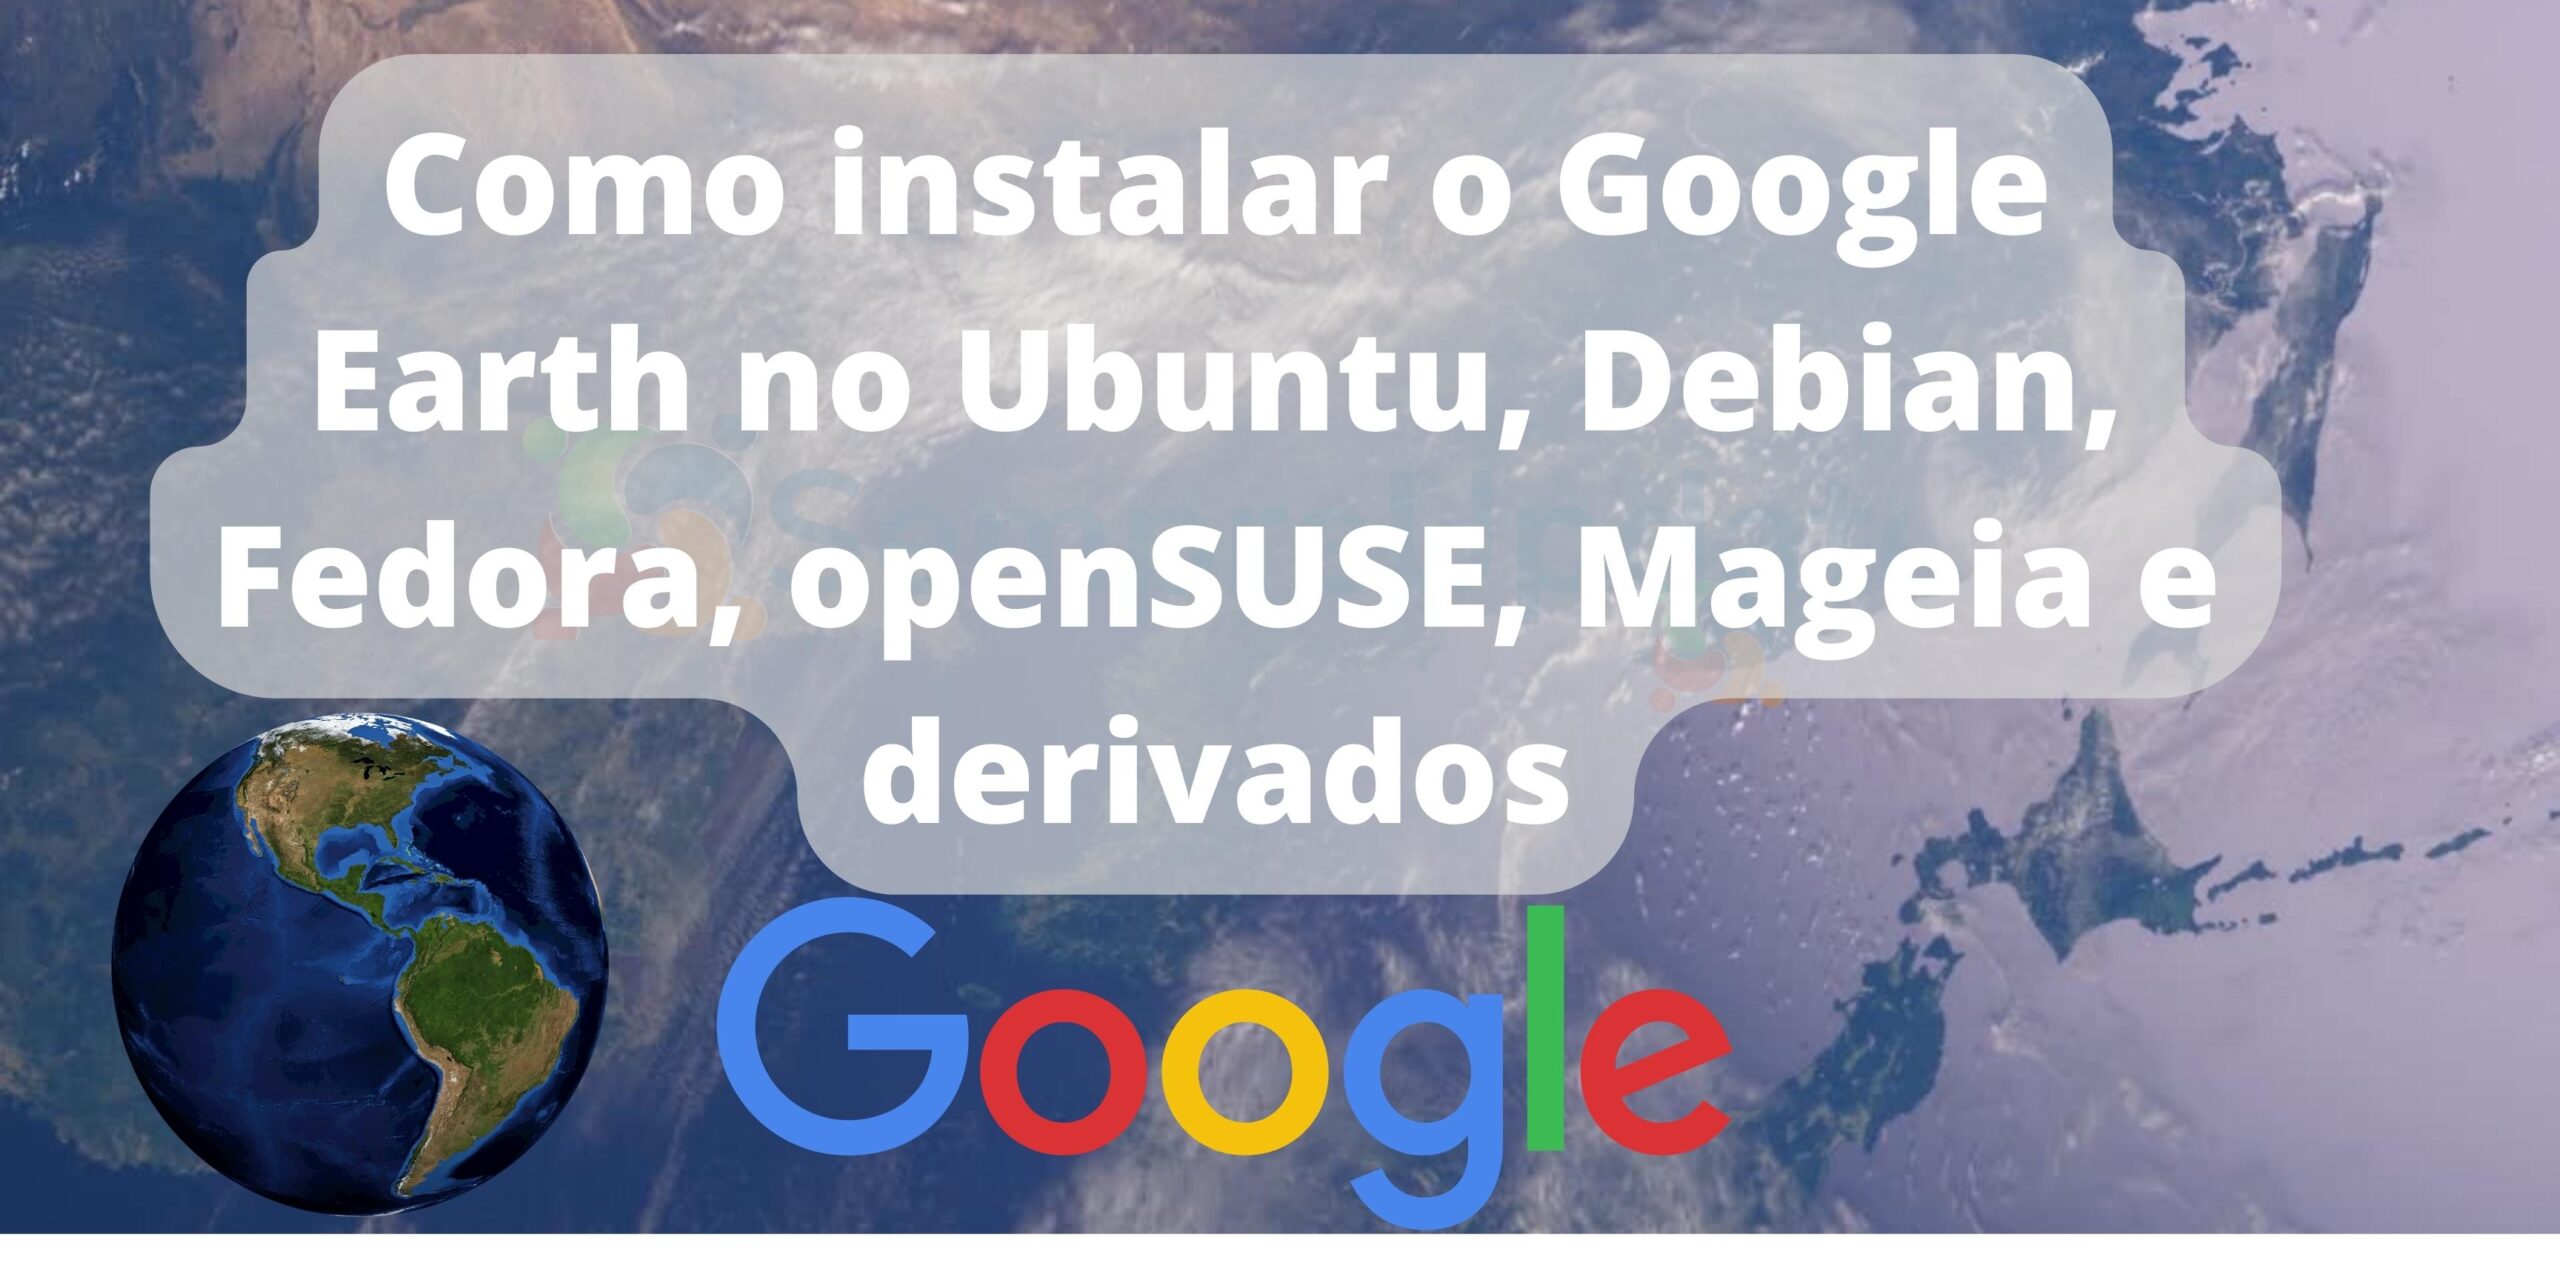 Como instalar o Google Earth no Ubuntu, Debian, Fedora, openSUSE, Mageia e derivados